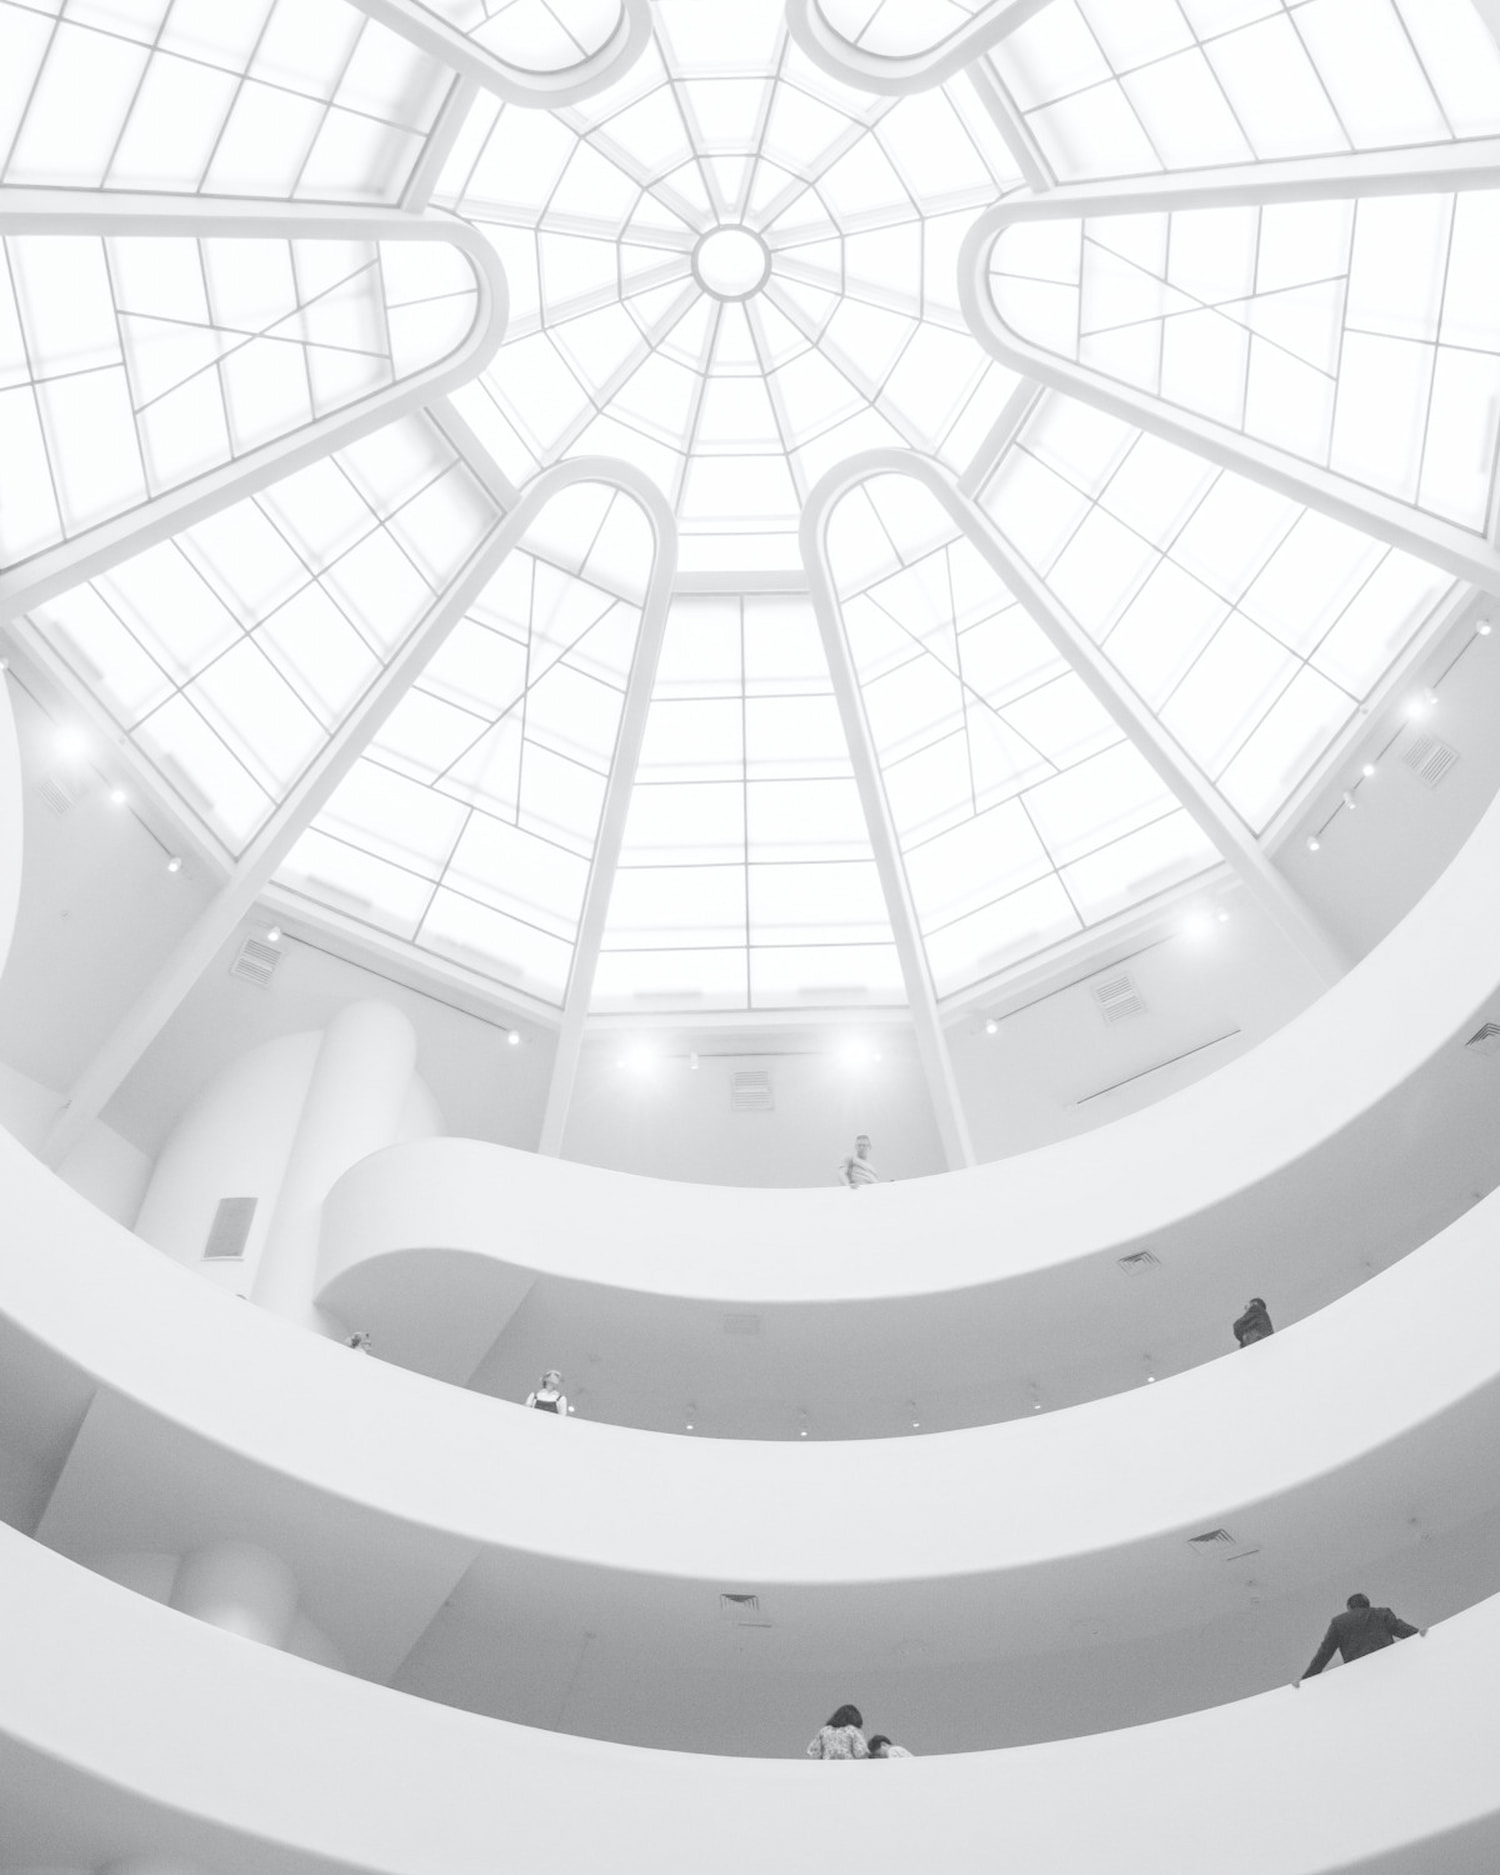 Guggenheim Museum, New York Photo by Drew Patrick Miller on Unsplash